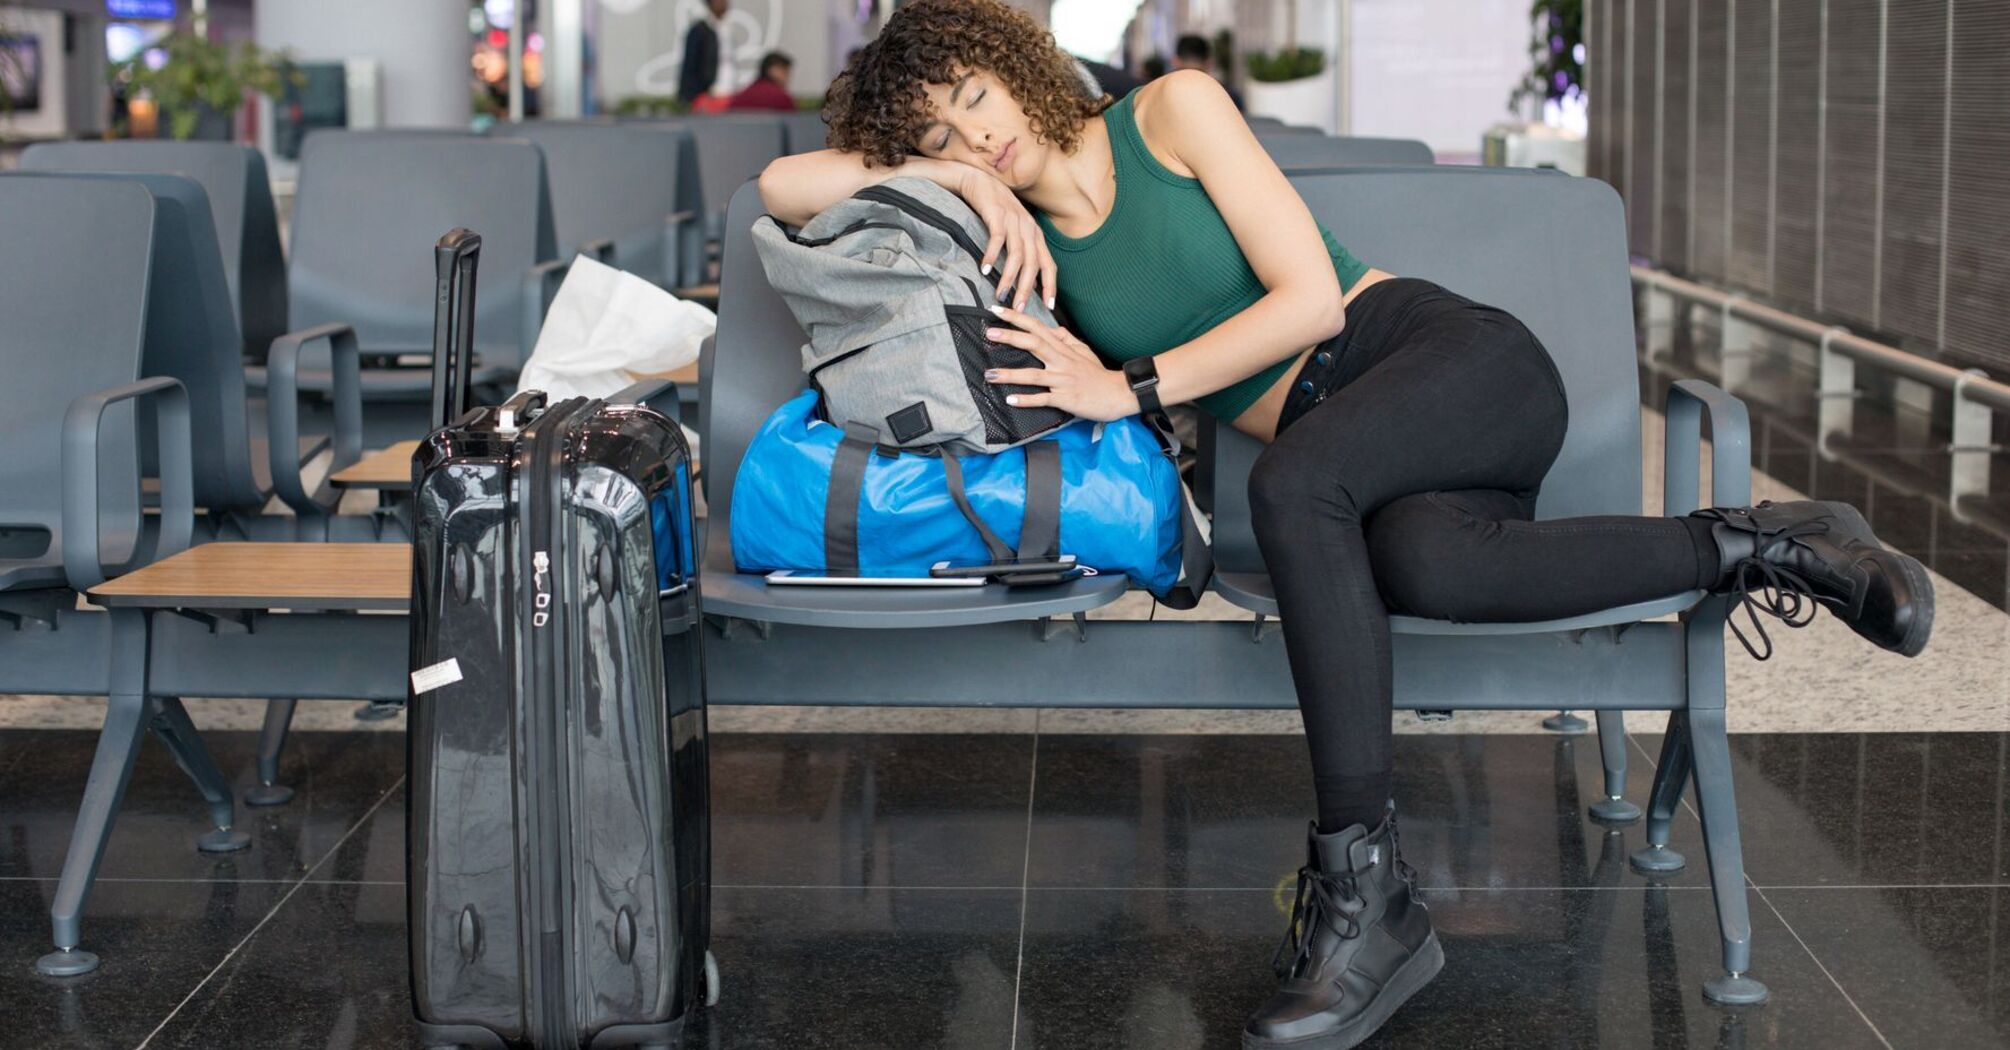 Three life hacks for sleeping at the airport